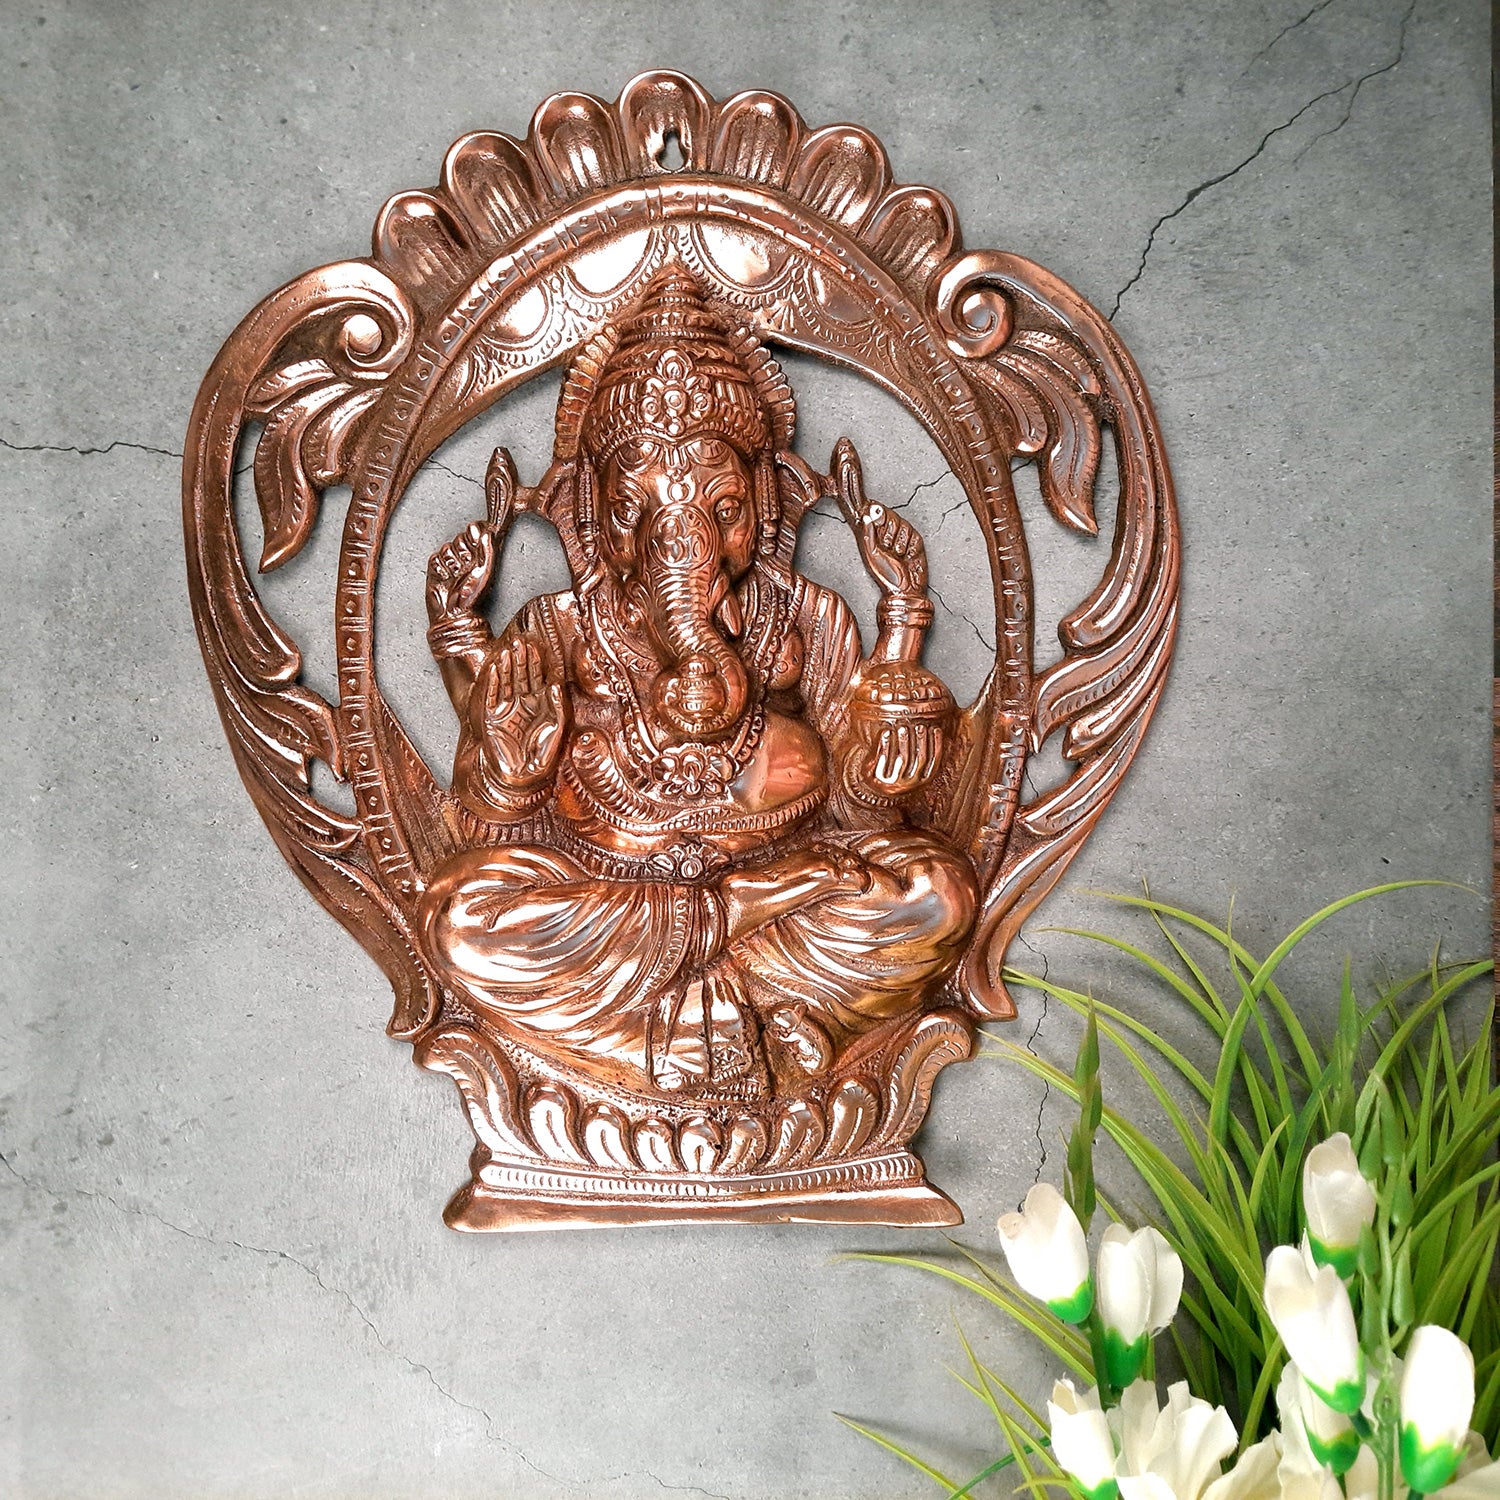 Ganesh Idol Wall Hanging | Lord Ganesha Face Wall Statue Decor | Religious & Spiritual Wall Art - For Puja, Home & Entrance Living Room & Gift - apkamart